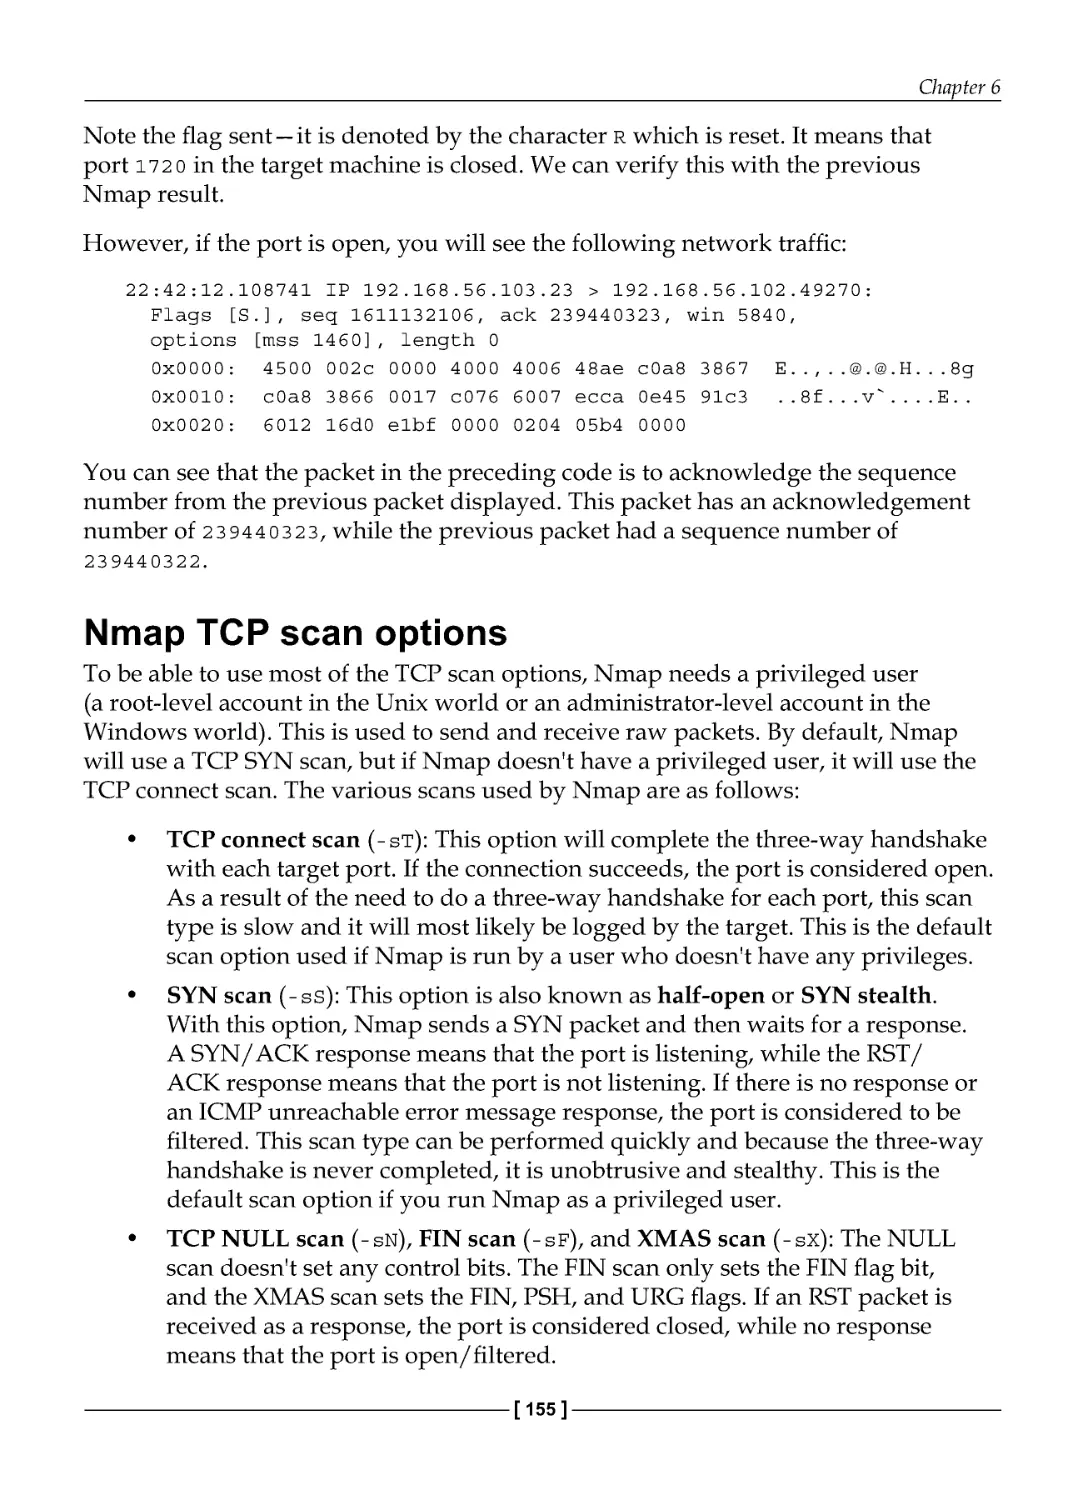 Nmap TCP scan options